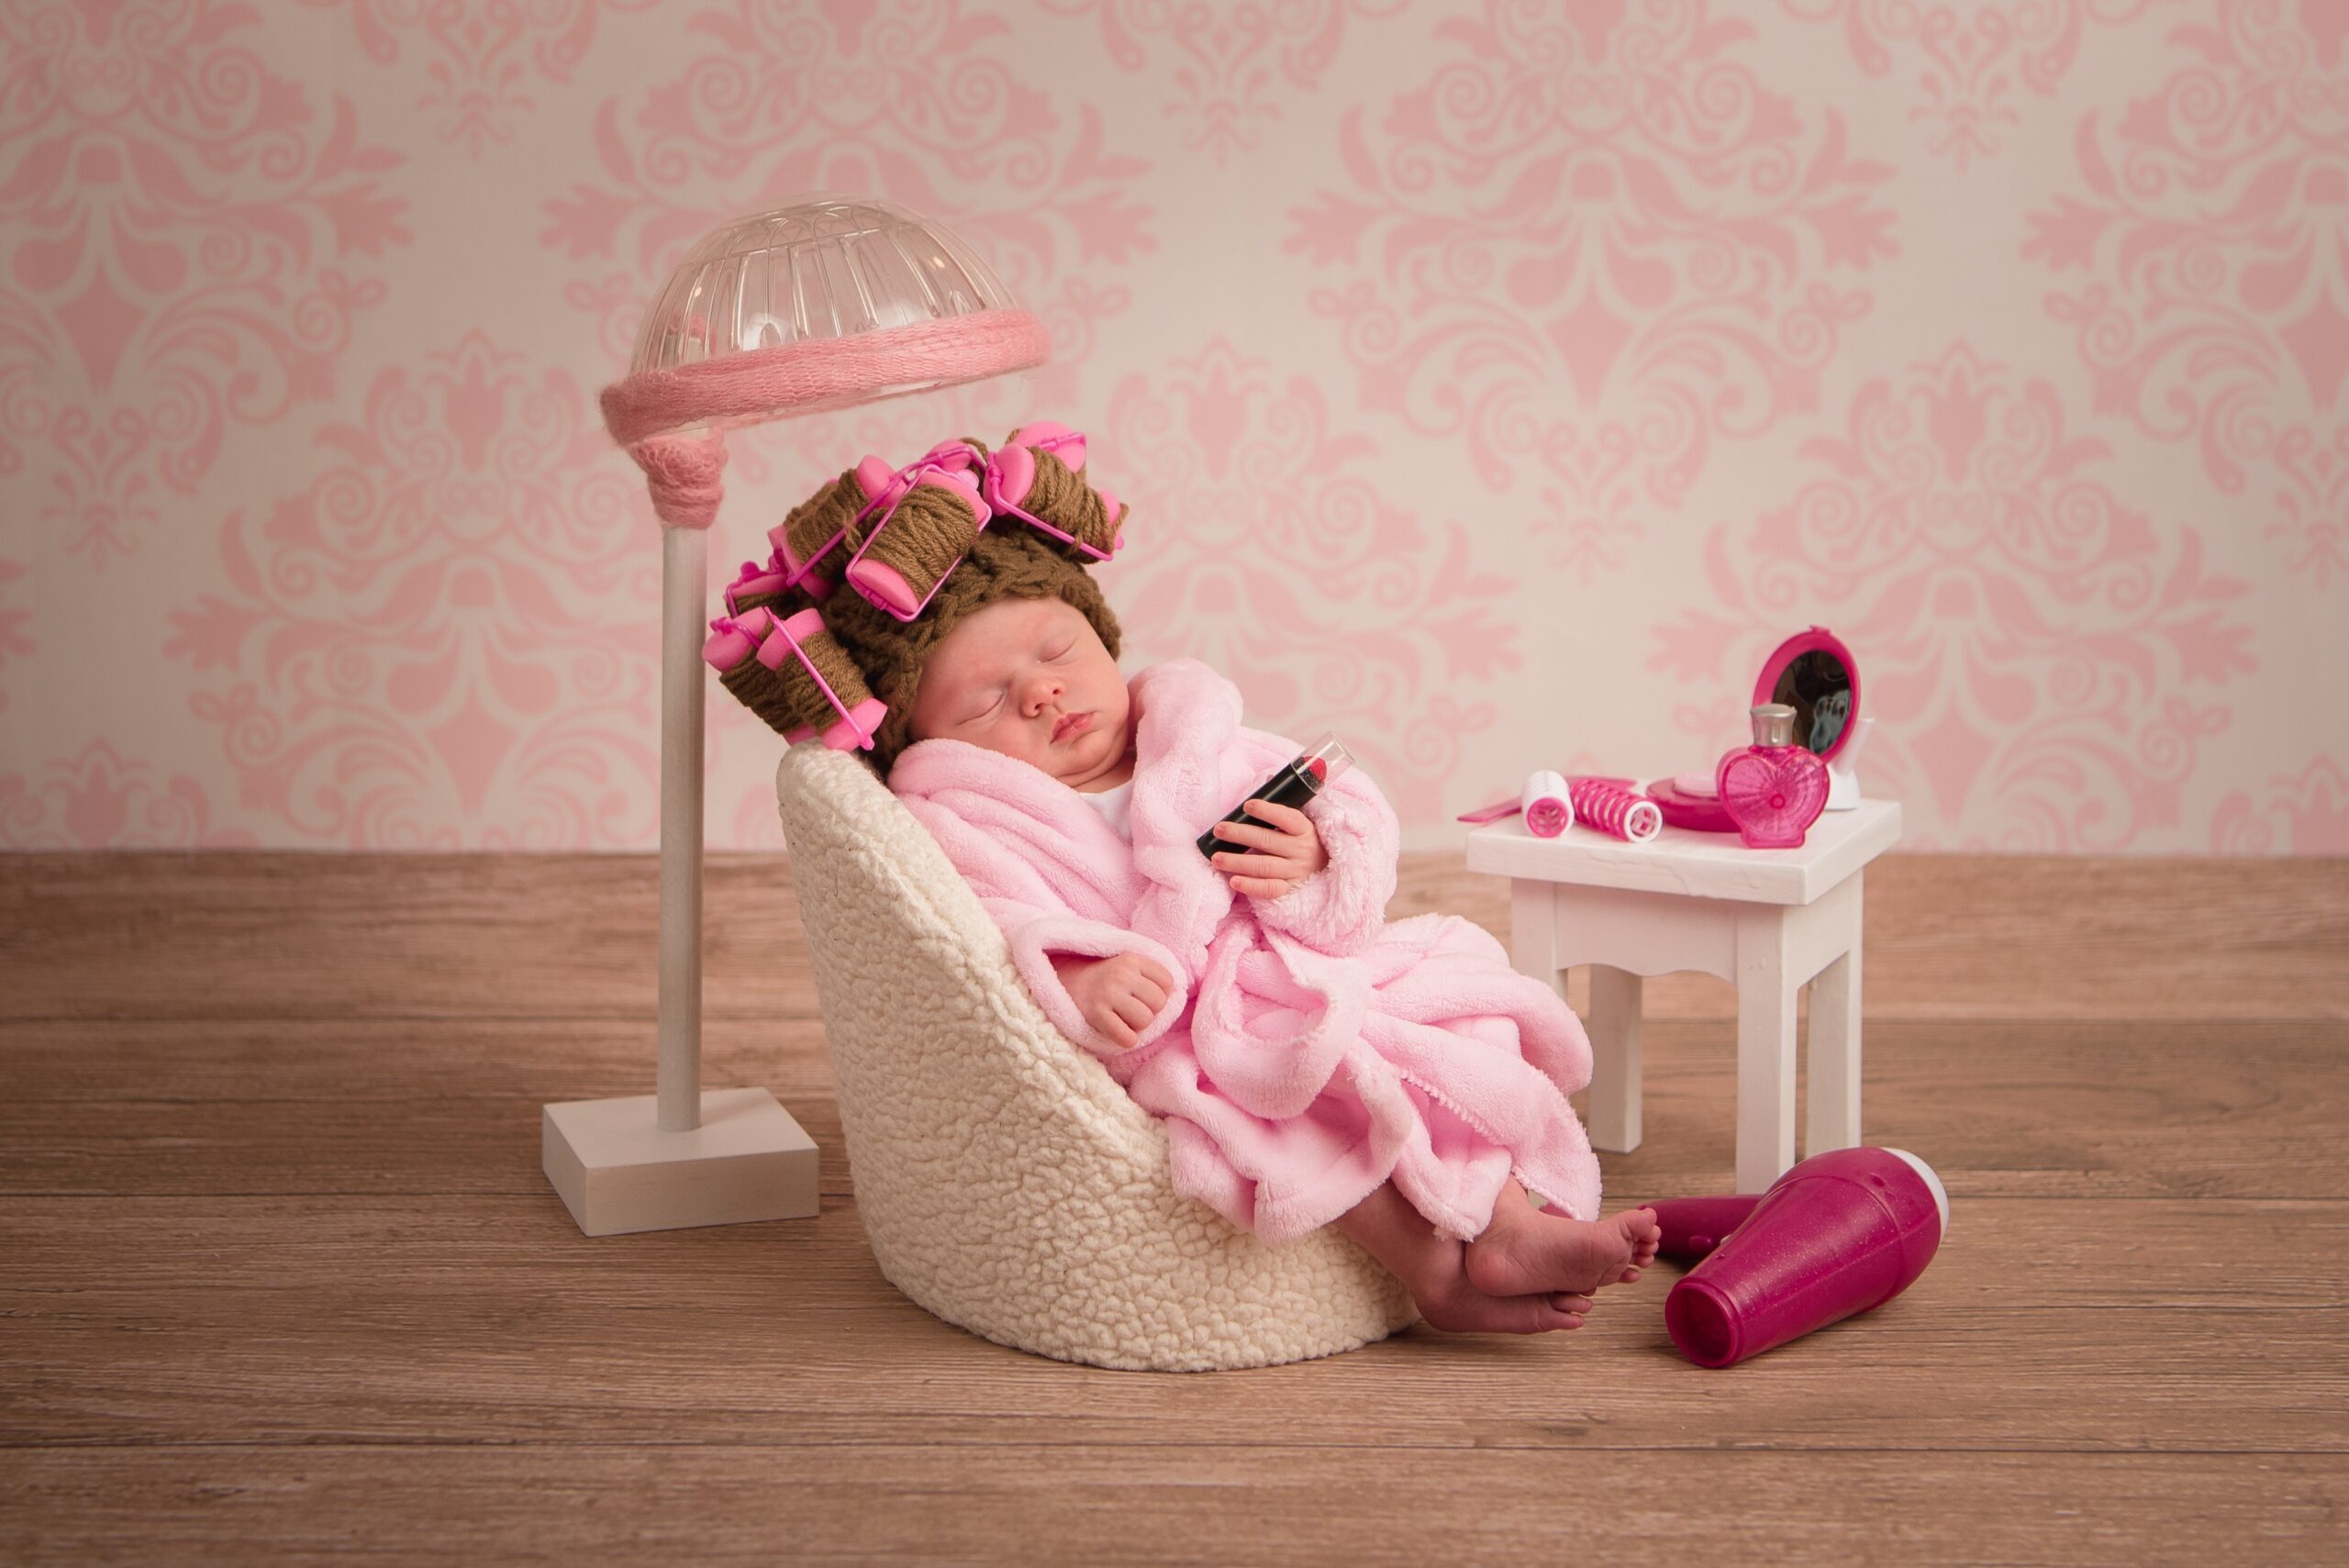 DSC 7189 Edit scaled - Portfolio: Infant Photography